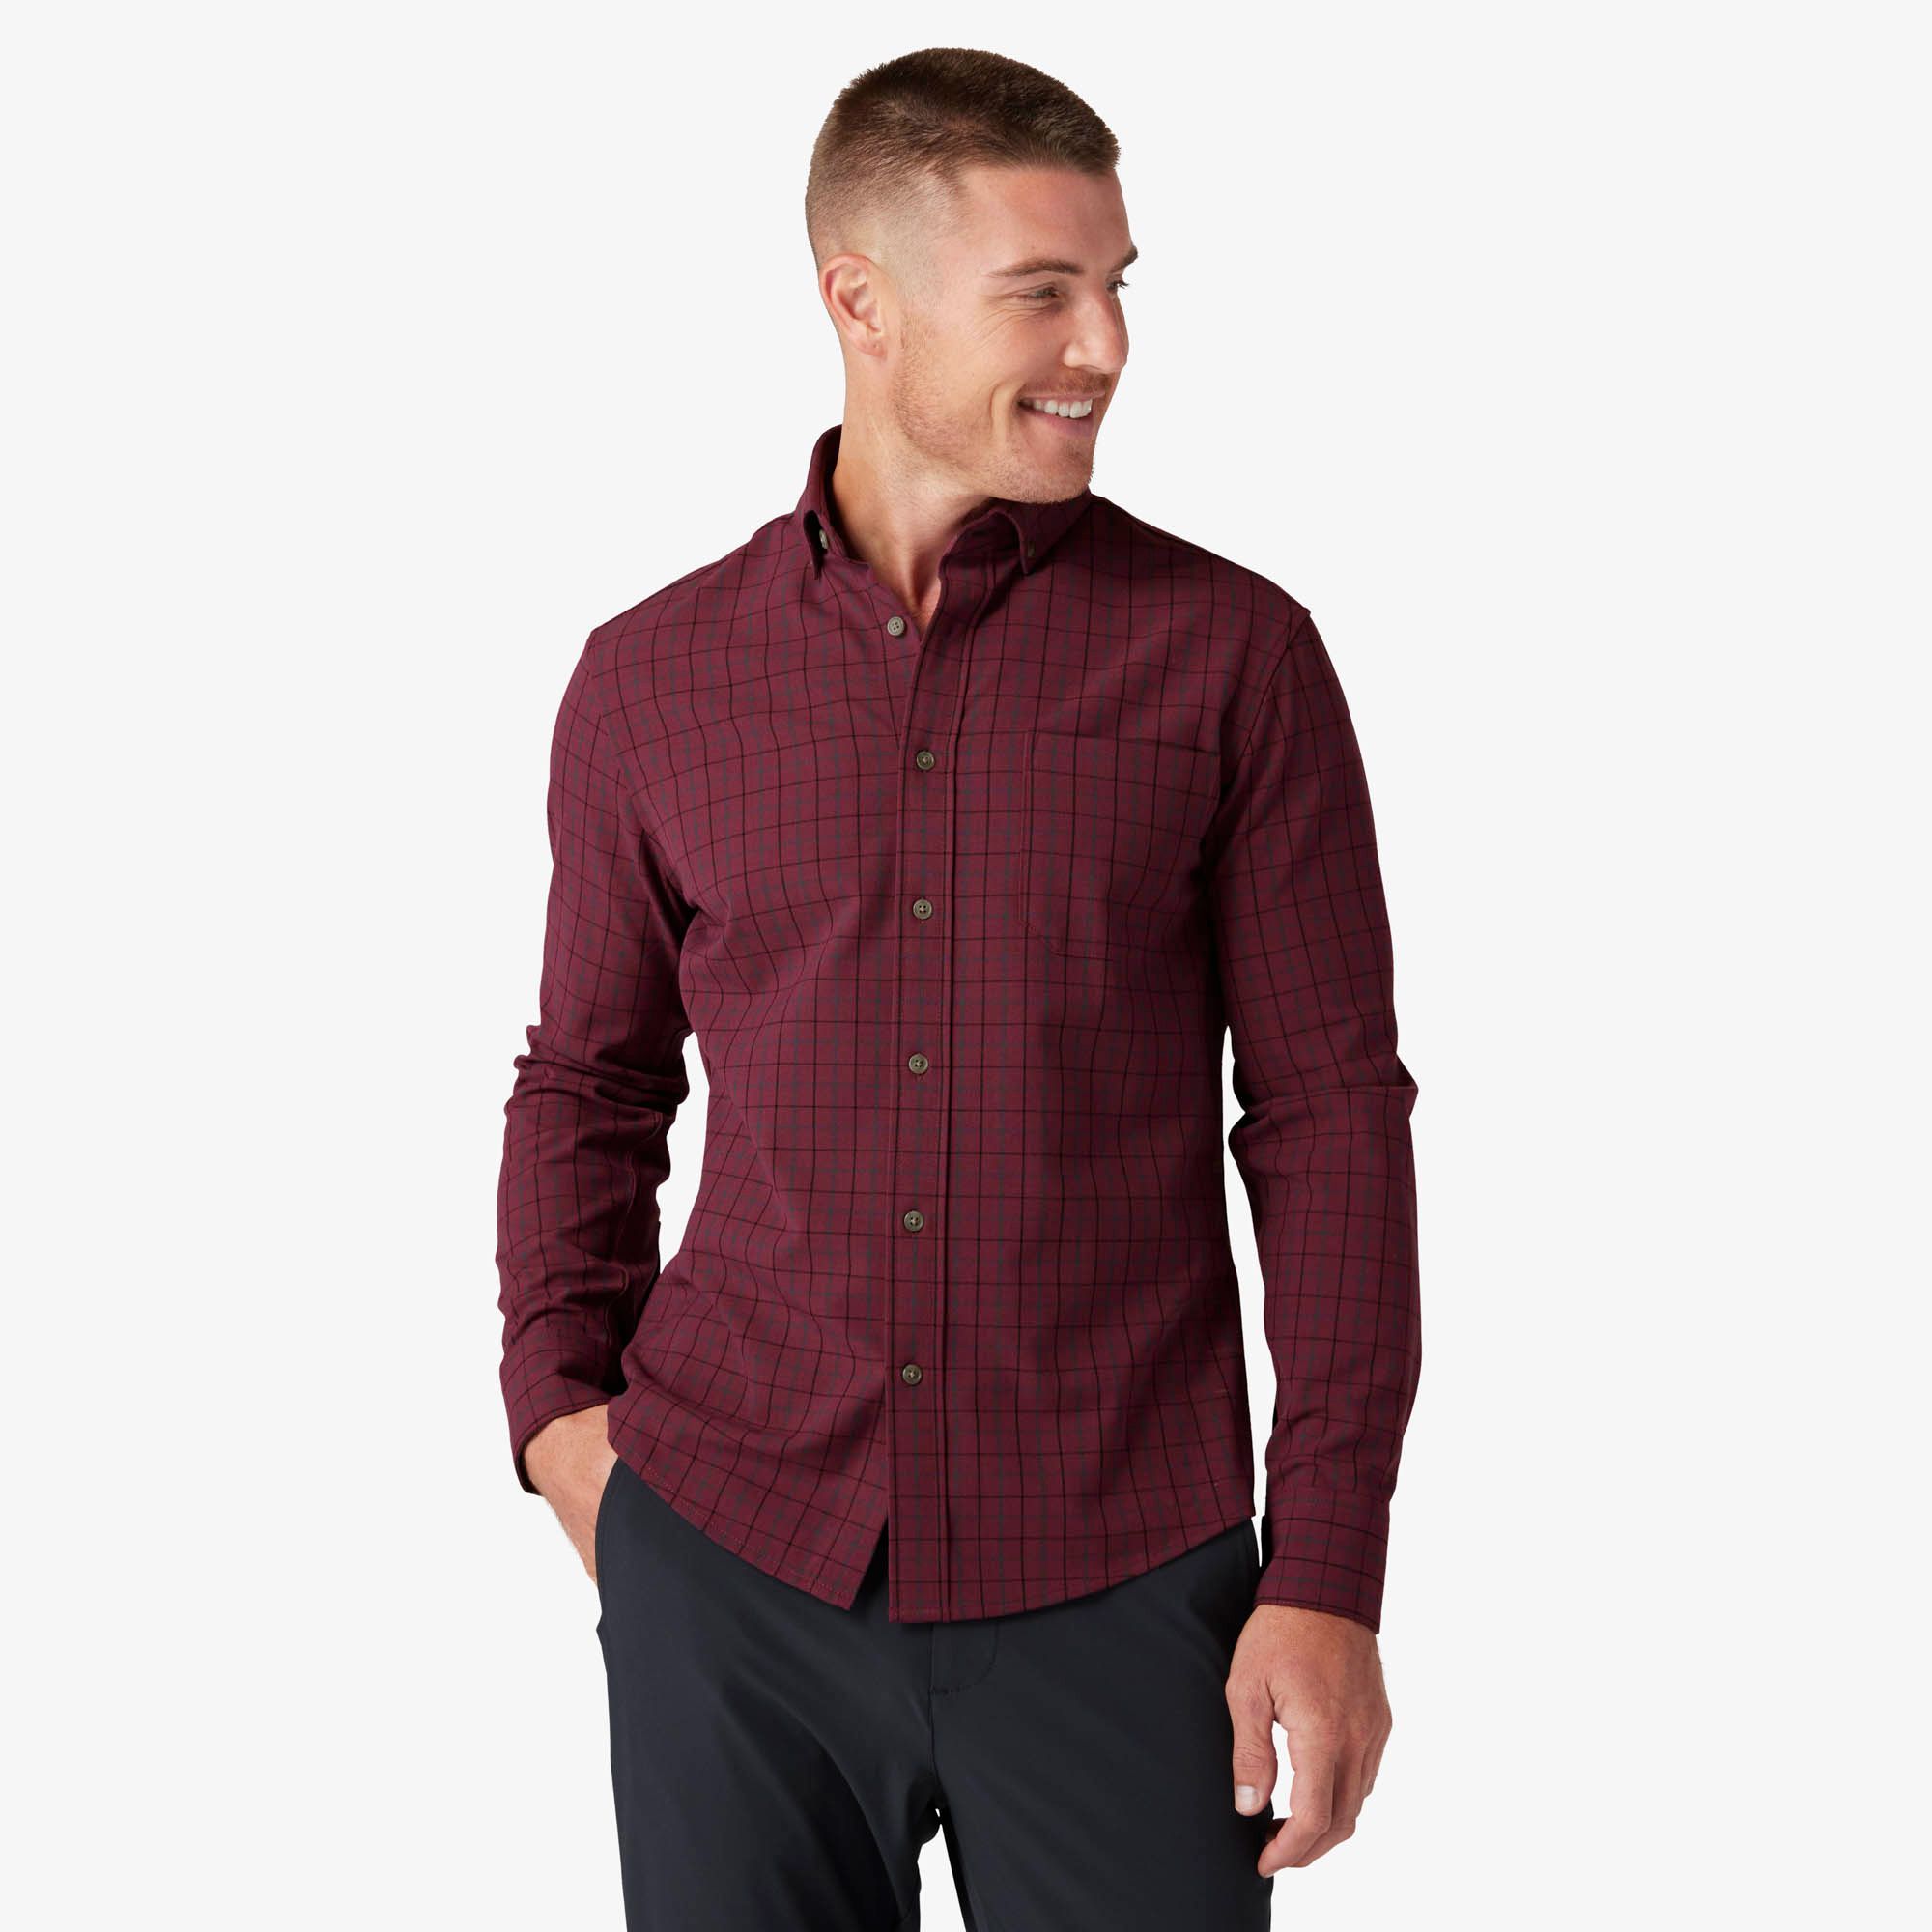 Grey Shirt Matching Pant Ideas | Grey Shirt Combination Pants - TiptopGents  | Maroon shirts, Maroon shirt outfit, Red shirt outfits